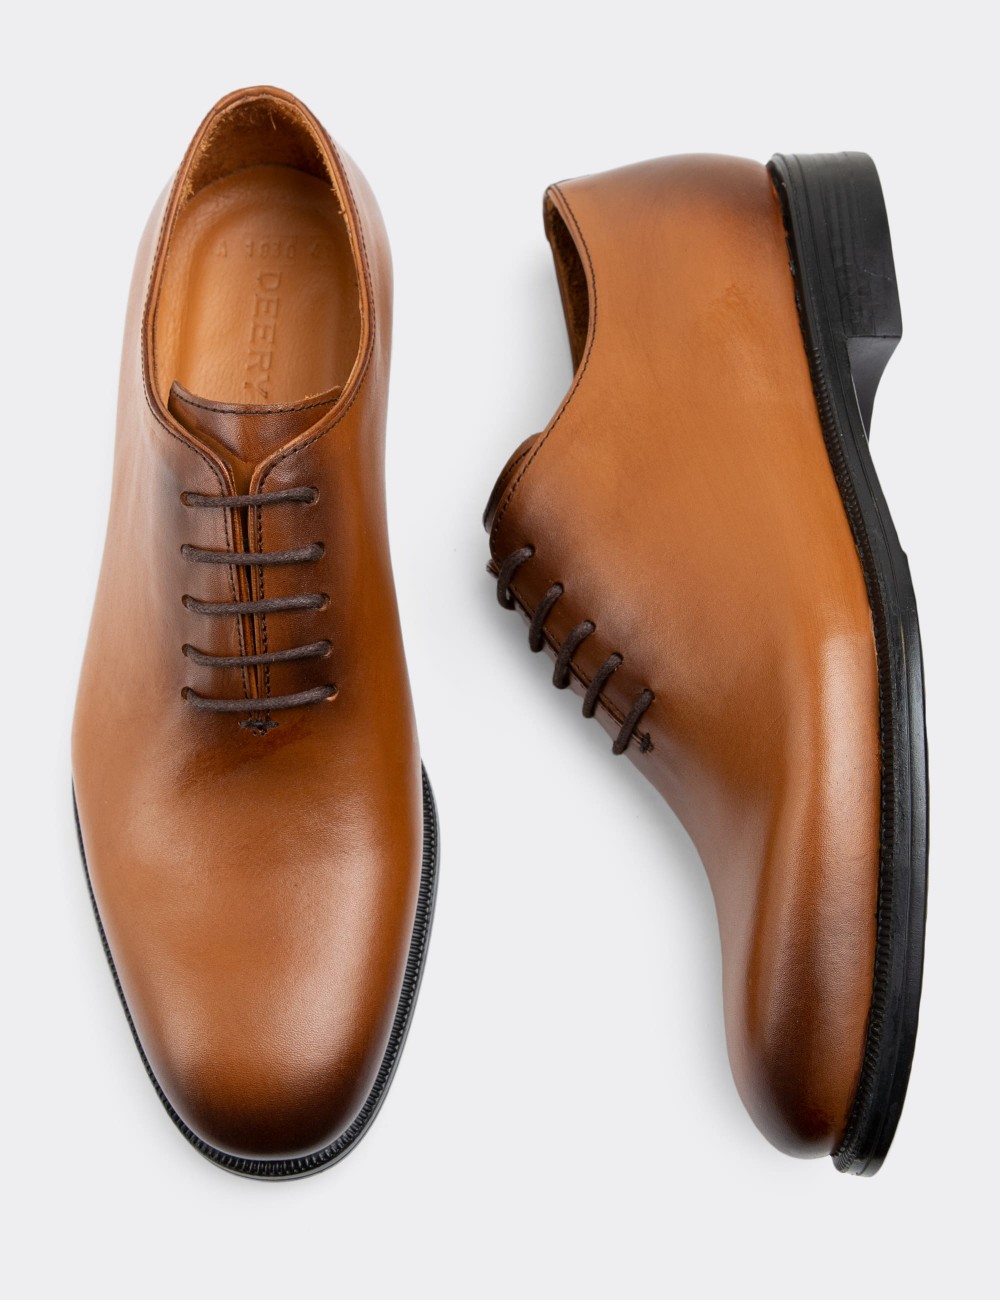 Tan Leather Classic Shoes - 01830MTBAC01